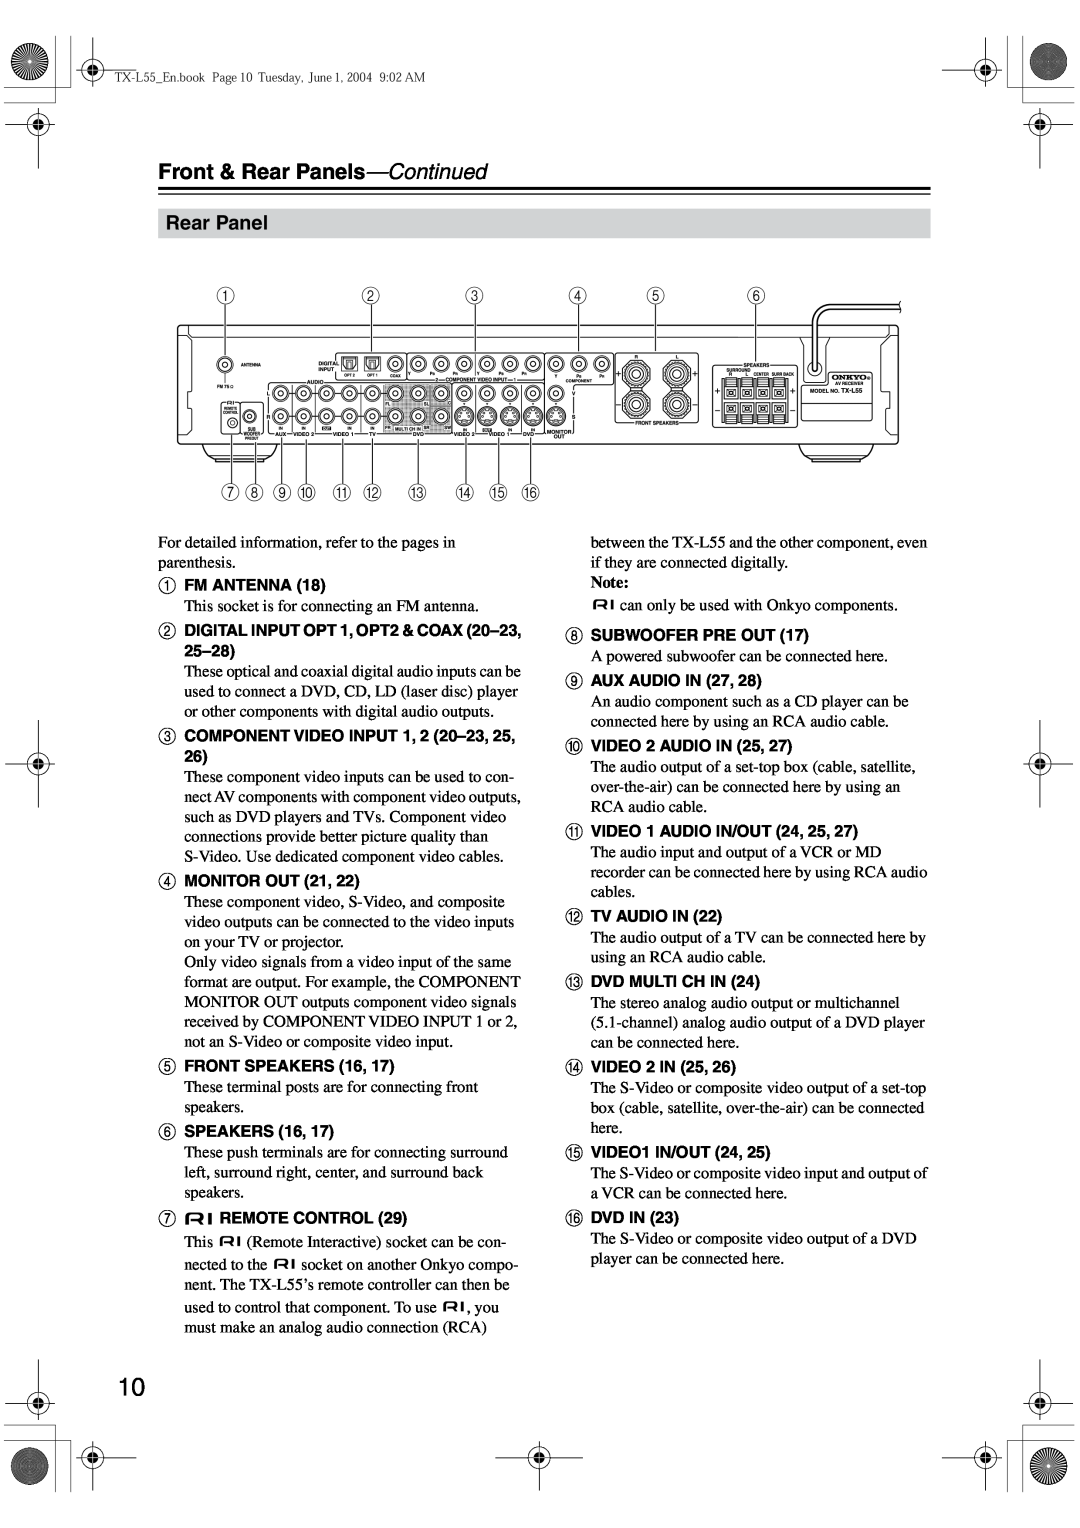 Onkyo TX-L55 instruction manual Front & Rear Panels-Continued, 7 8 9 J K L M, N O P 